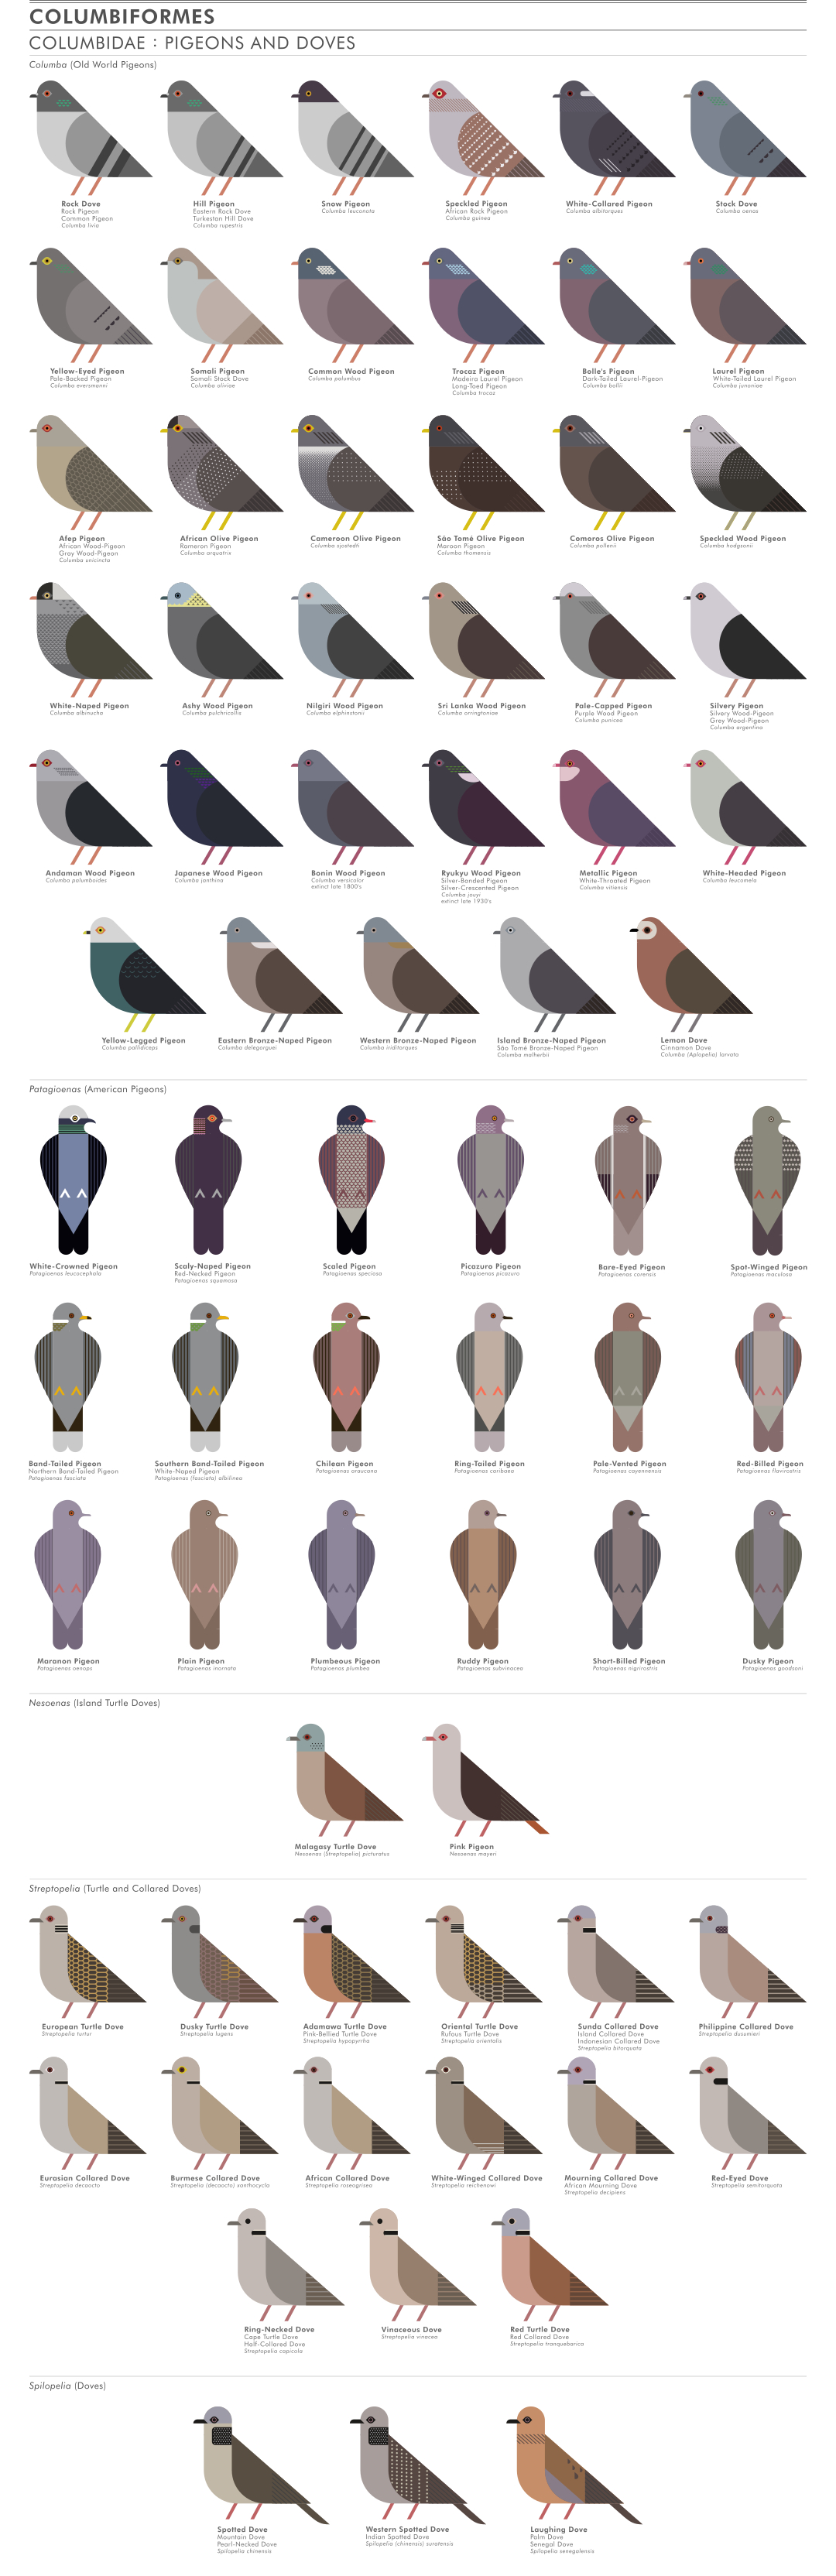 scott partridge - ave - avian vector encyclopedia - pigeons Columbidae Columbiformes - vector bird art